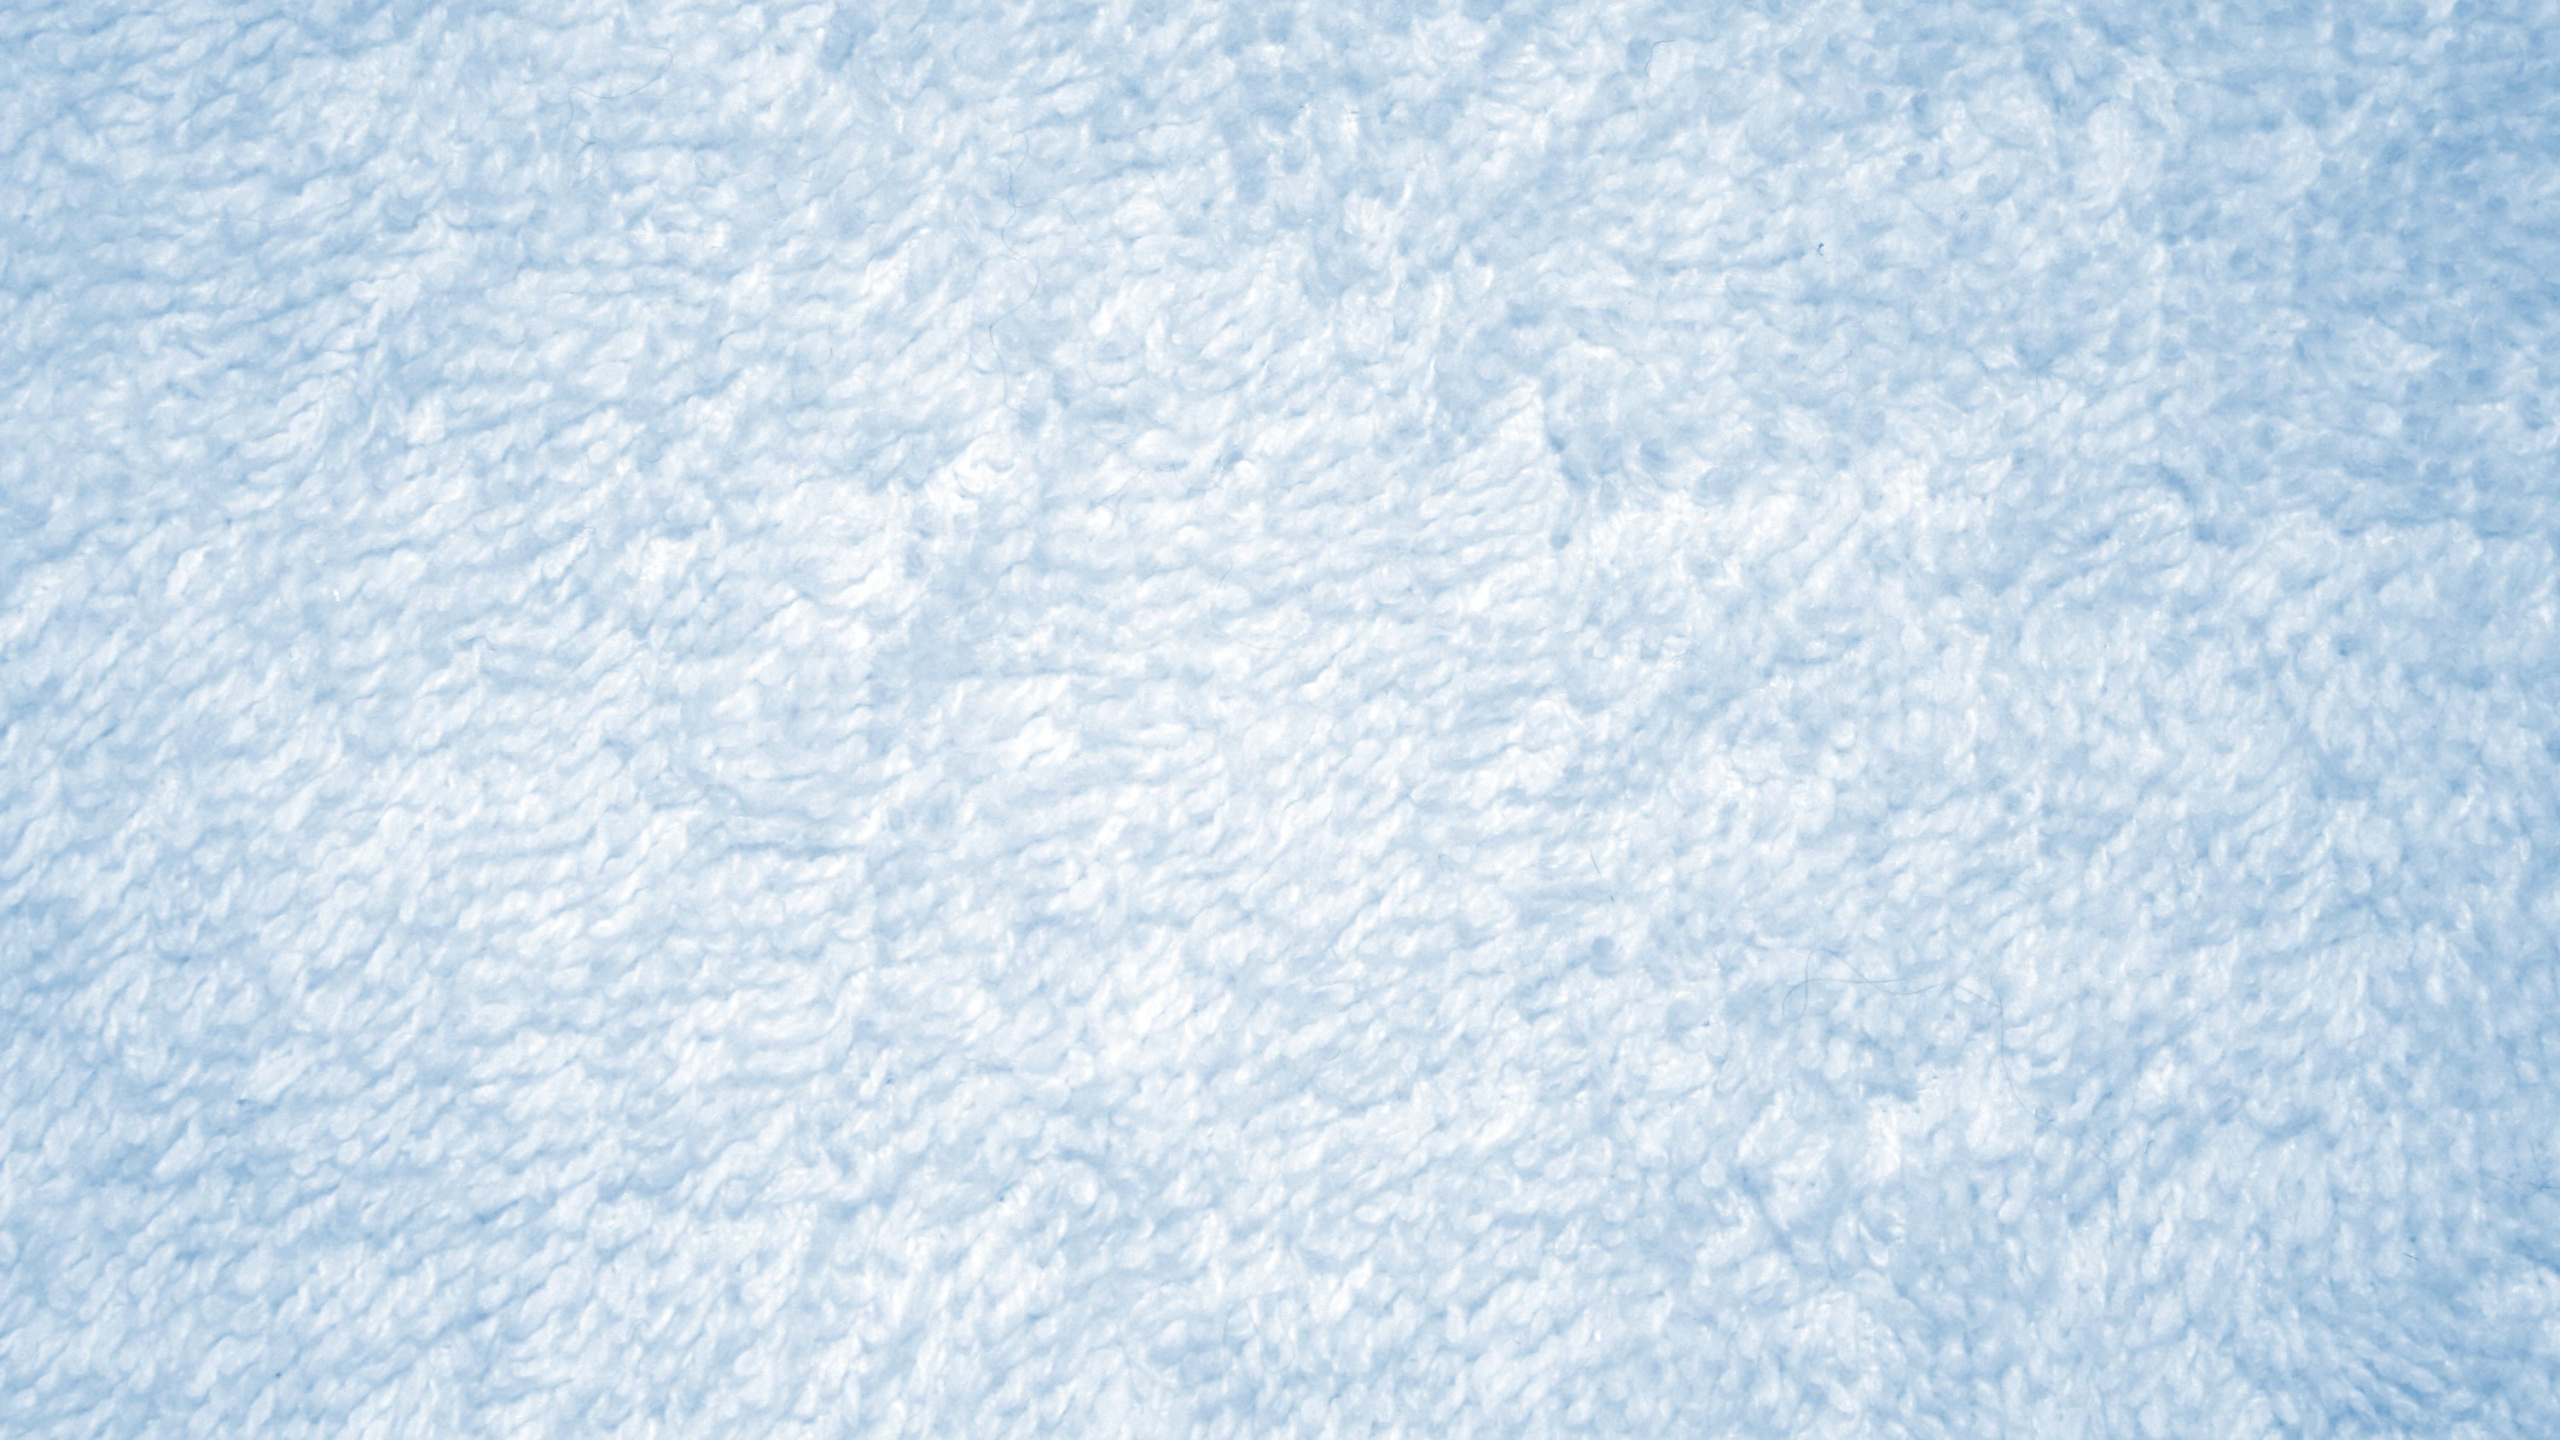 Textil Azul en Fotografía de Cerca. Wallpaper in 2560x1440 Resolution